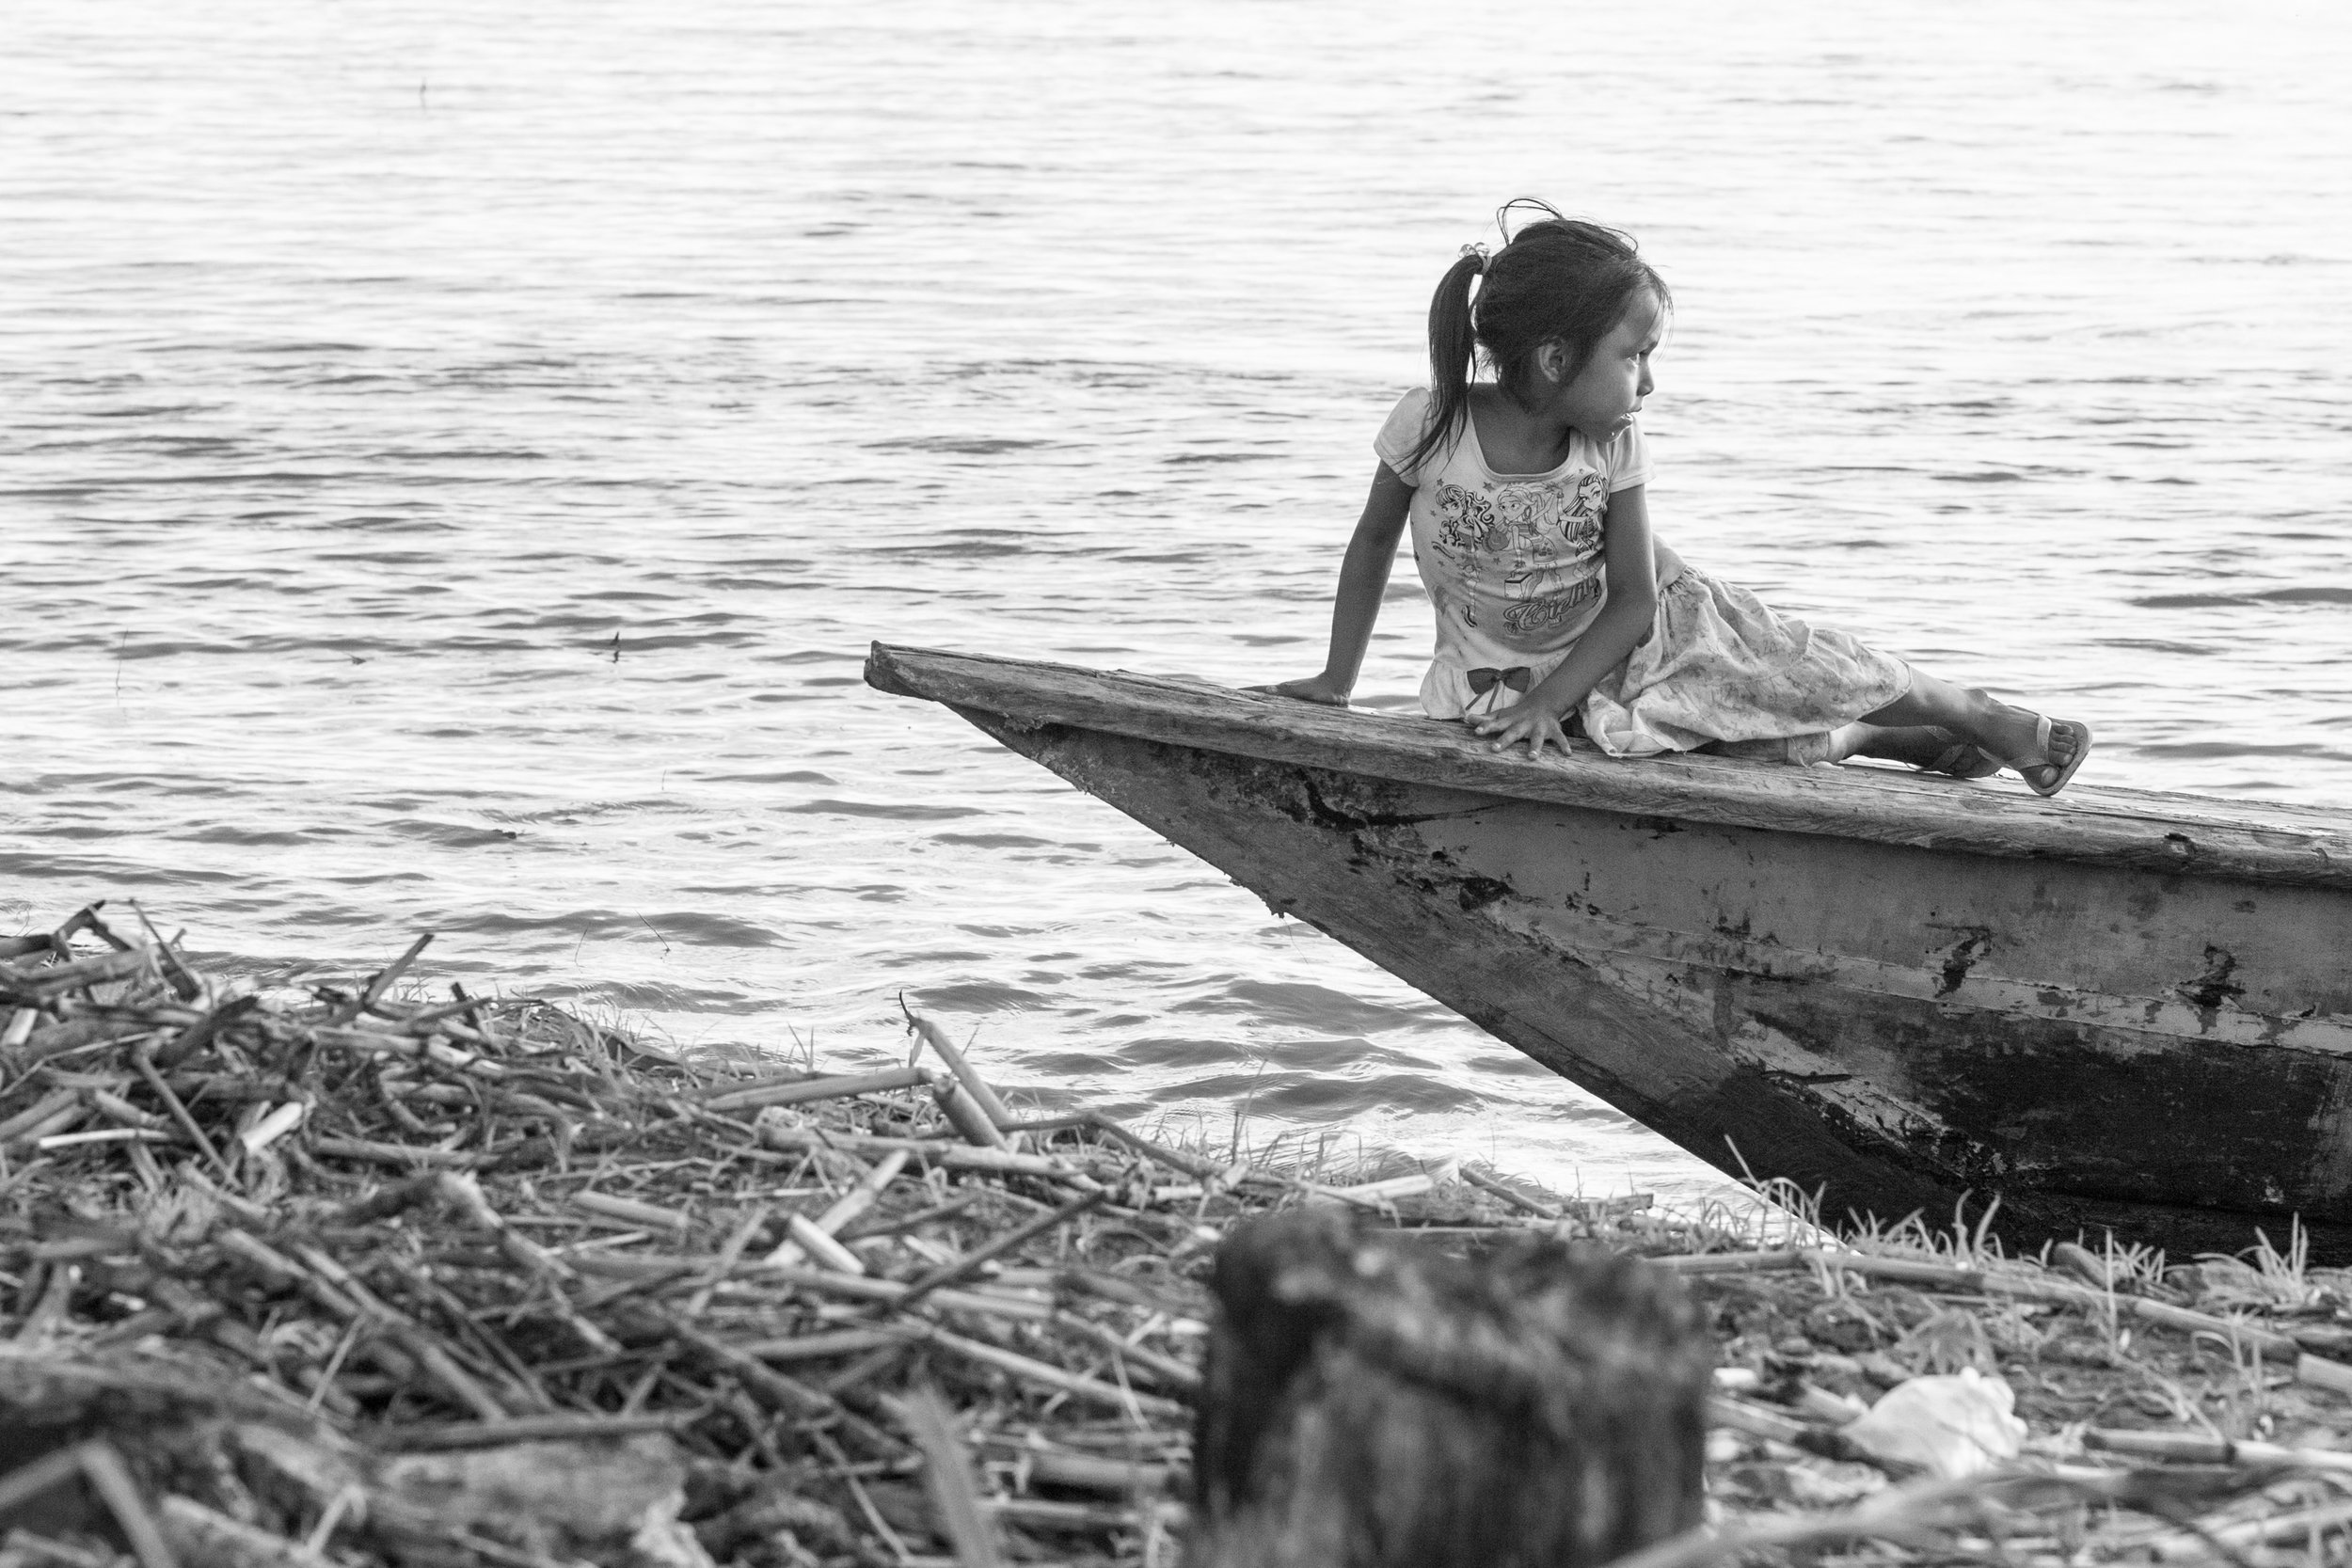 Black and child portrait taken in the Amazon region of Peru.